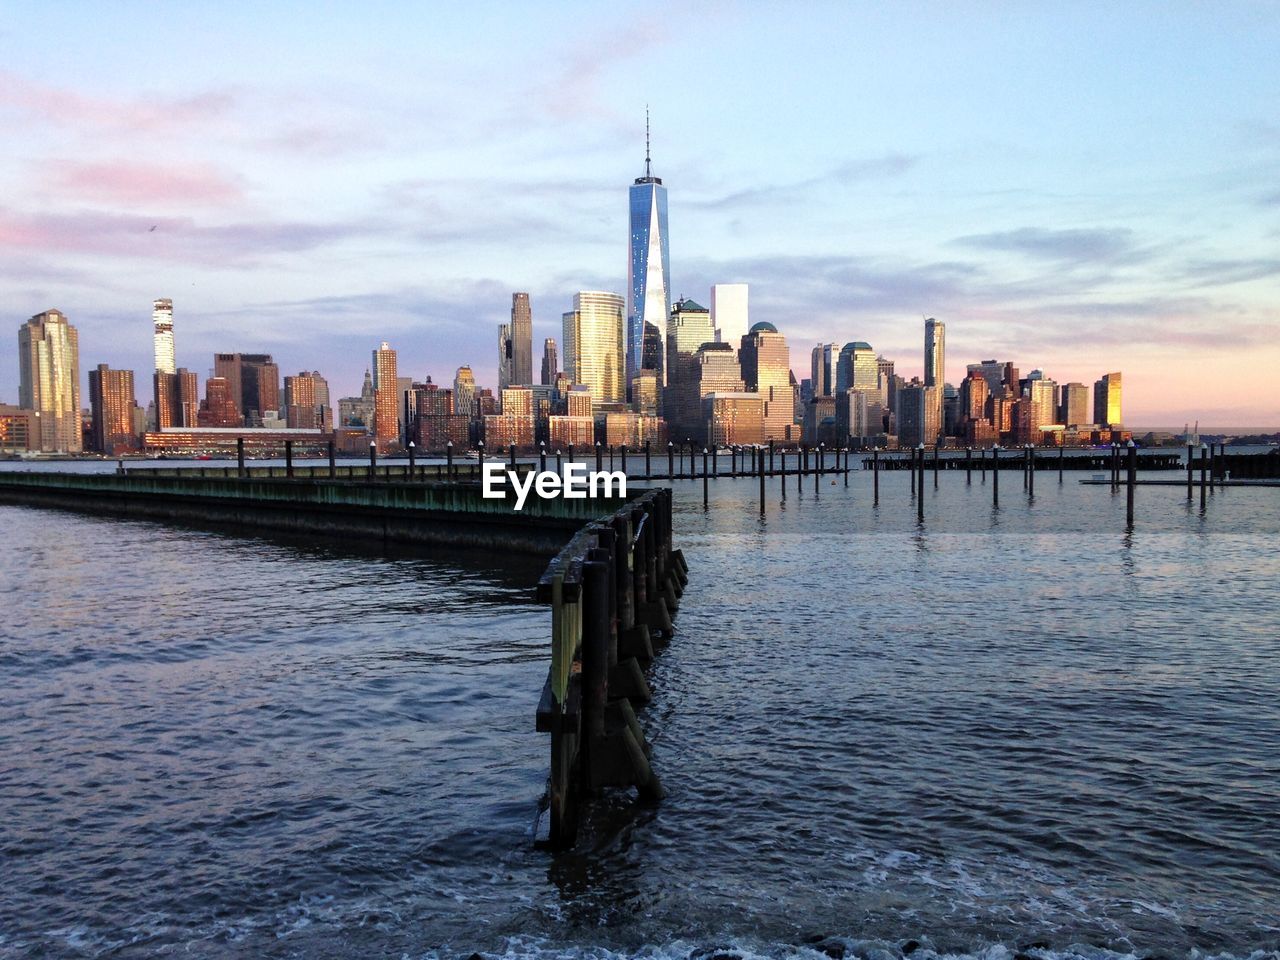 New york city skyline 